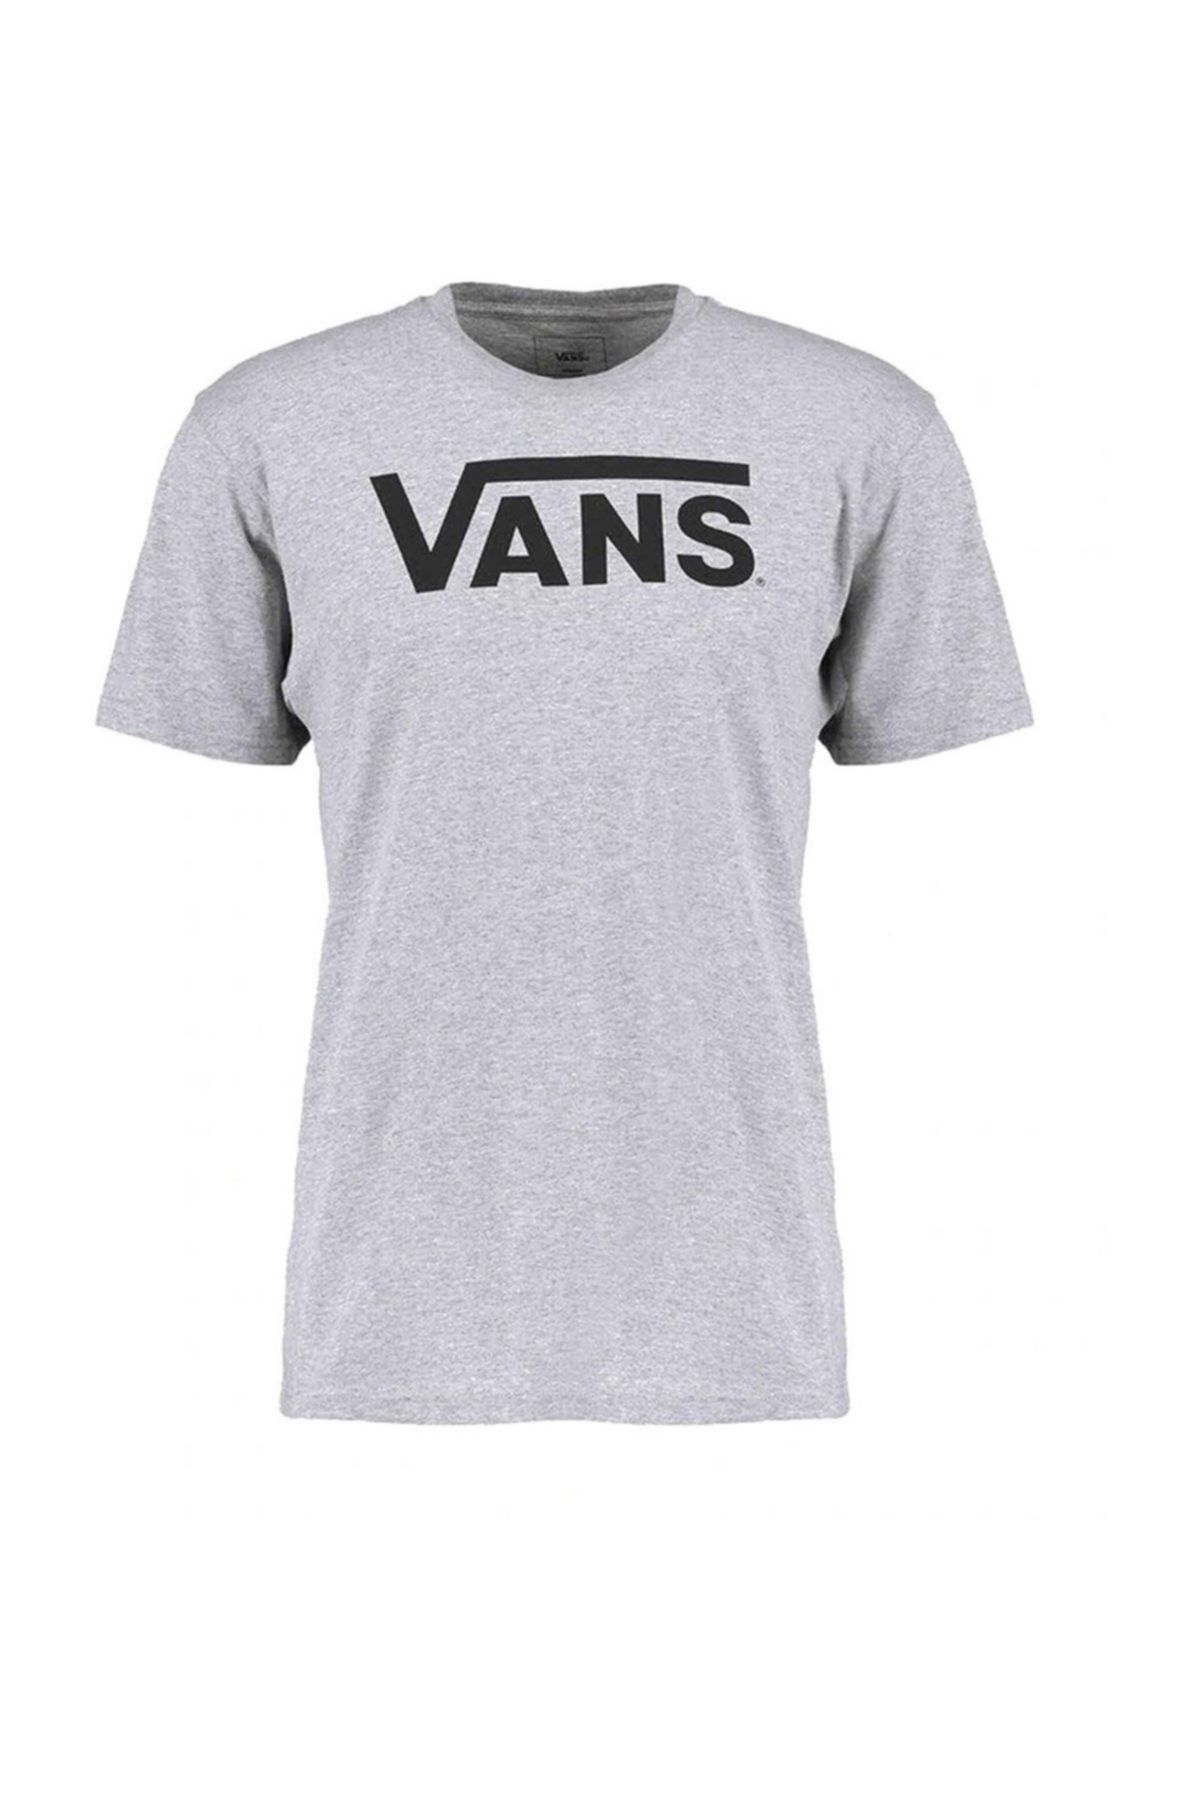 Vans Classıc Gri Erkek Kısa Kol T-shirt